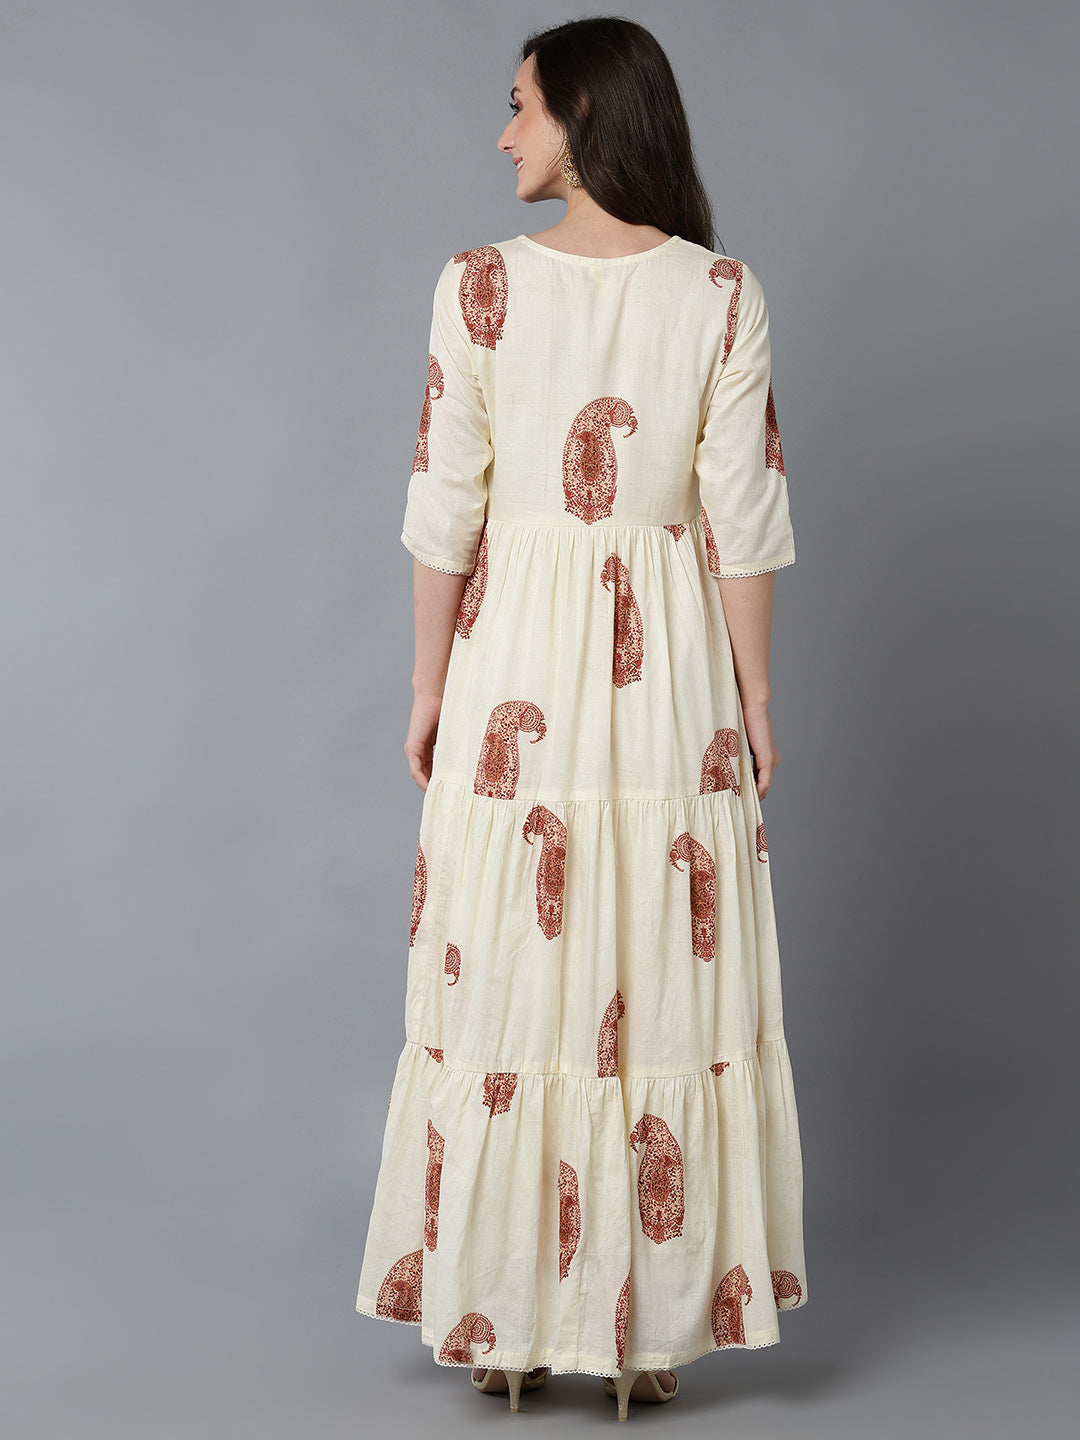 Women's Cream Cotton Ethnic Motifs Printed Dress  - Ahika